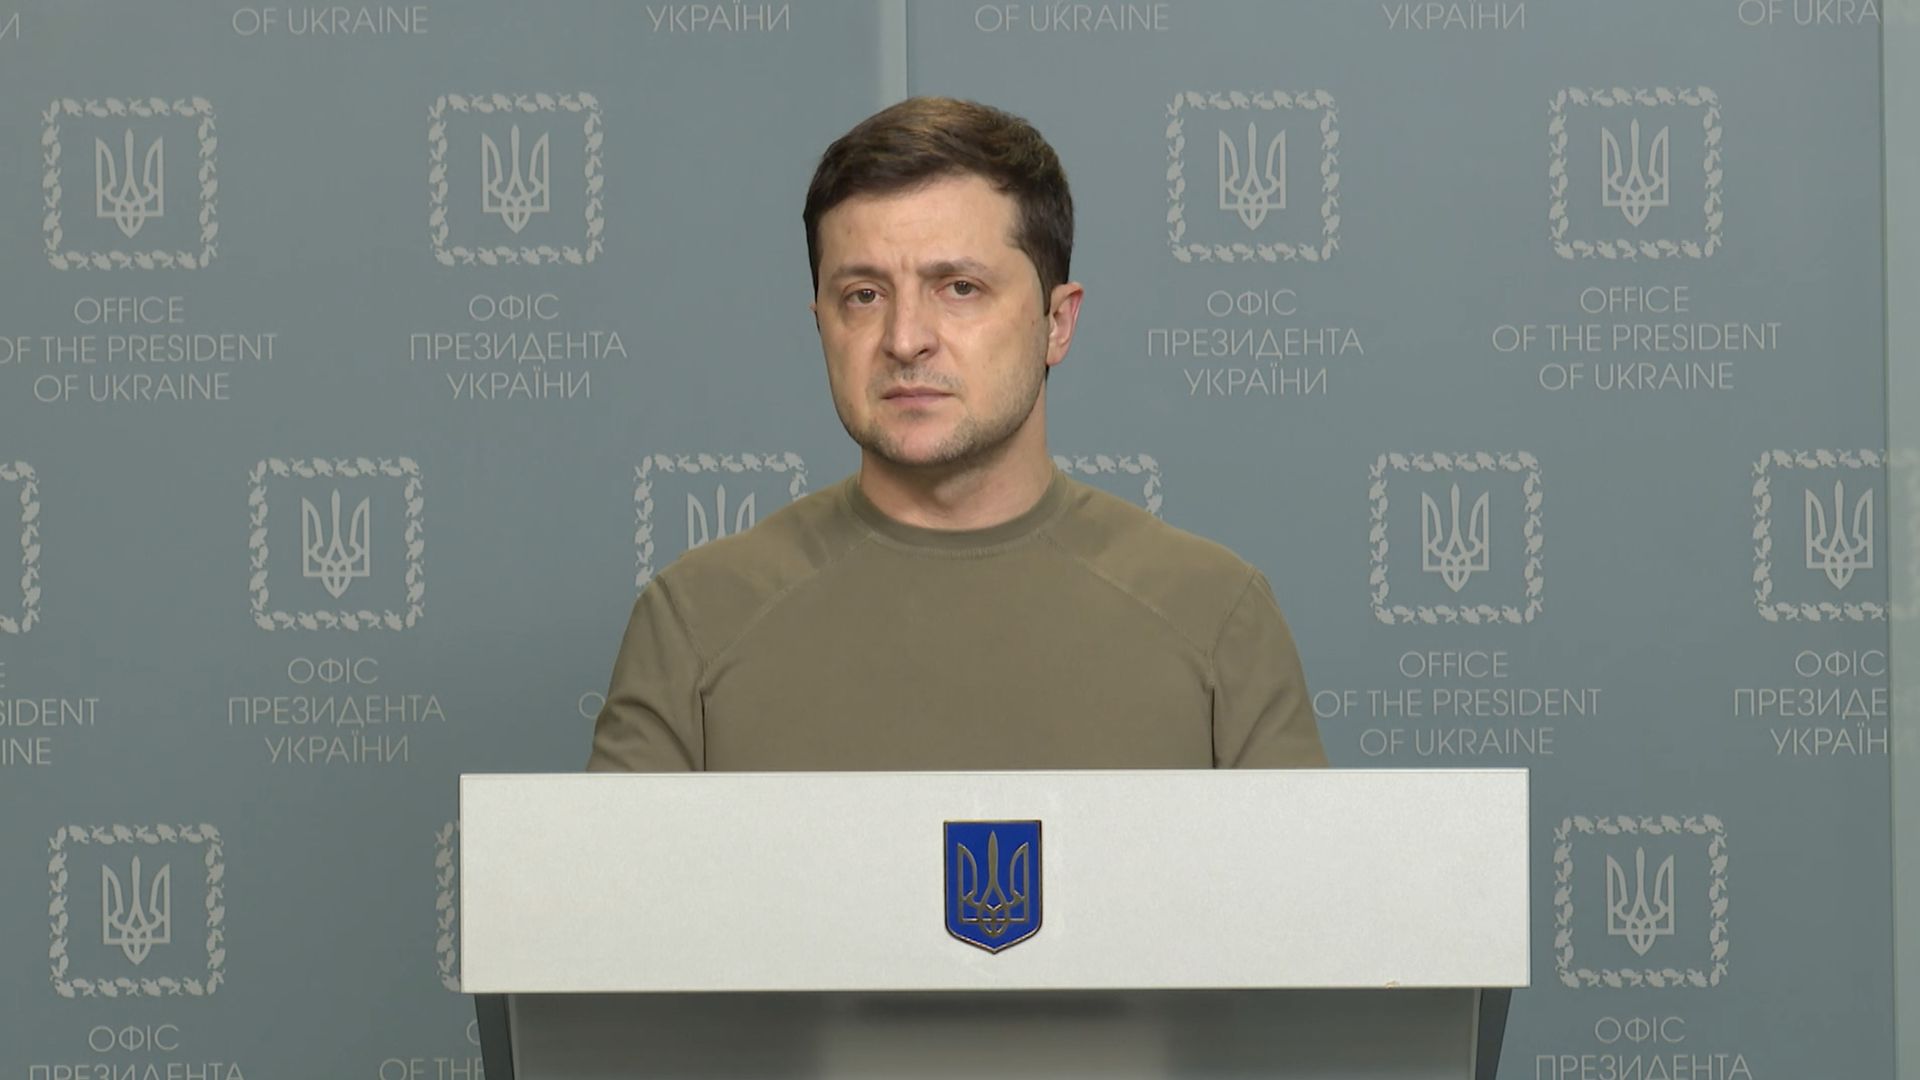 Ukrainian President Volodymyr Zelenskyy holds a press conference in regard of Russia's attack on Ukraine in Kiev, Ukraine on February 24